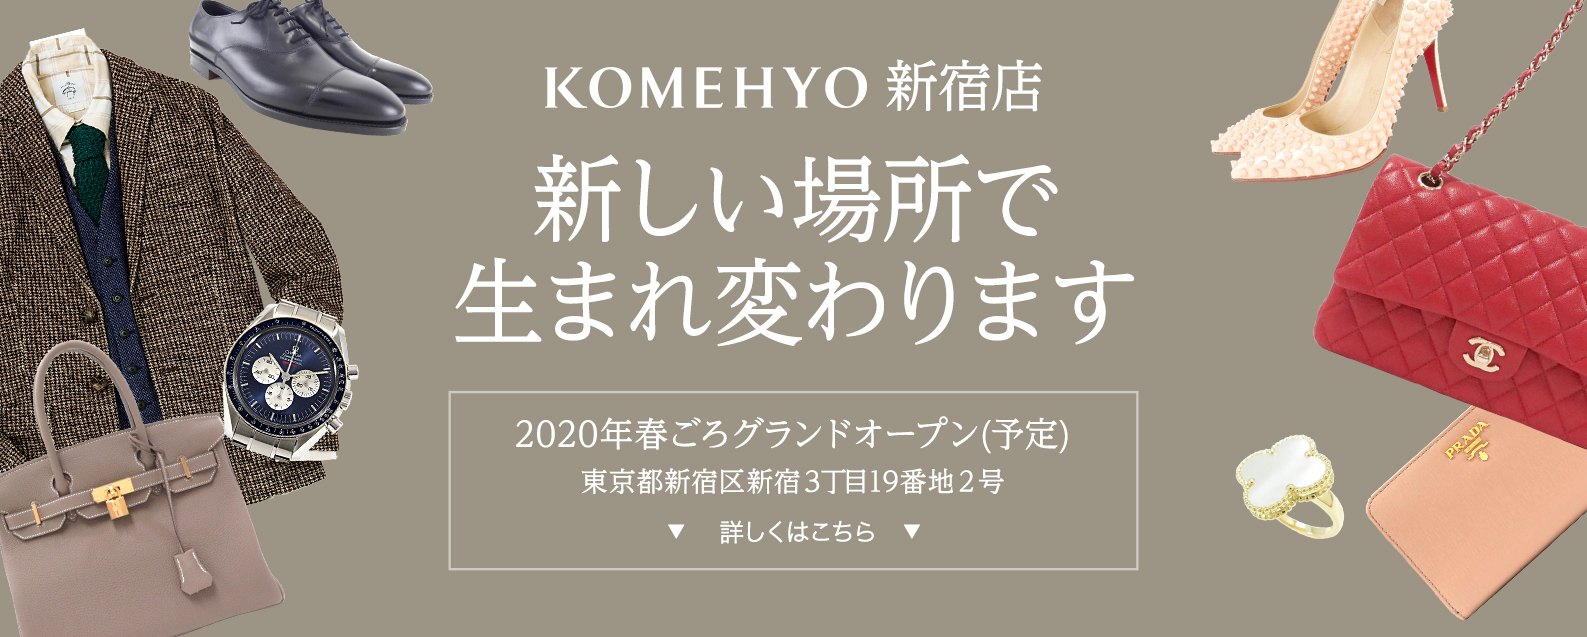 KOMEHYO 新宿店が新しい場所で生まれ変わります 2020年春ごろグランドオープン(予定)東京都新宿区新宿3丁目19番地2号